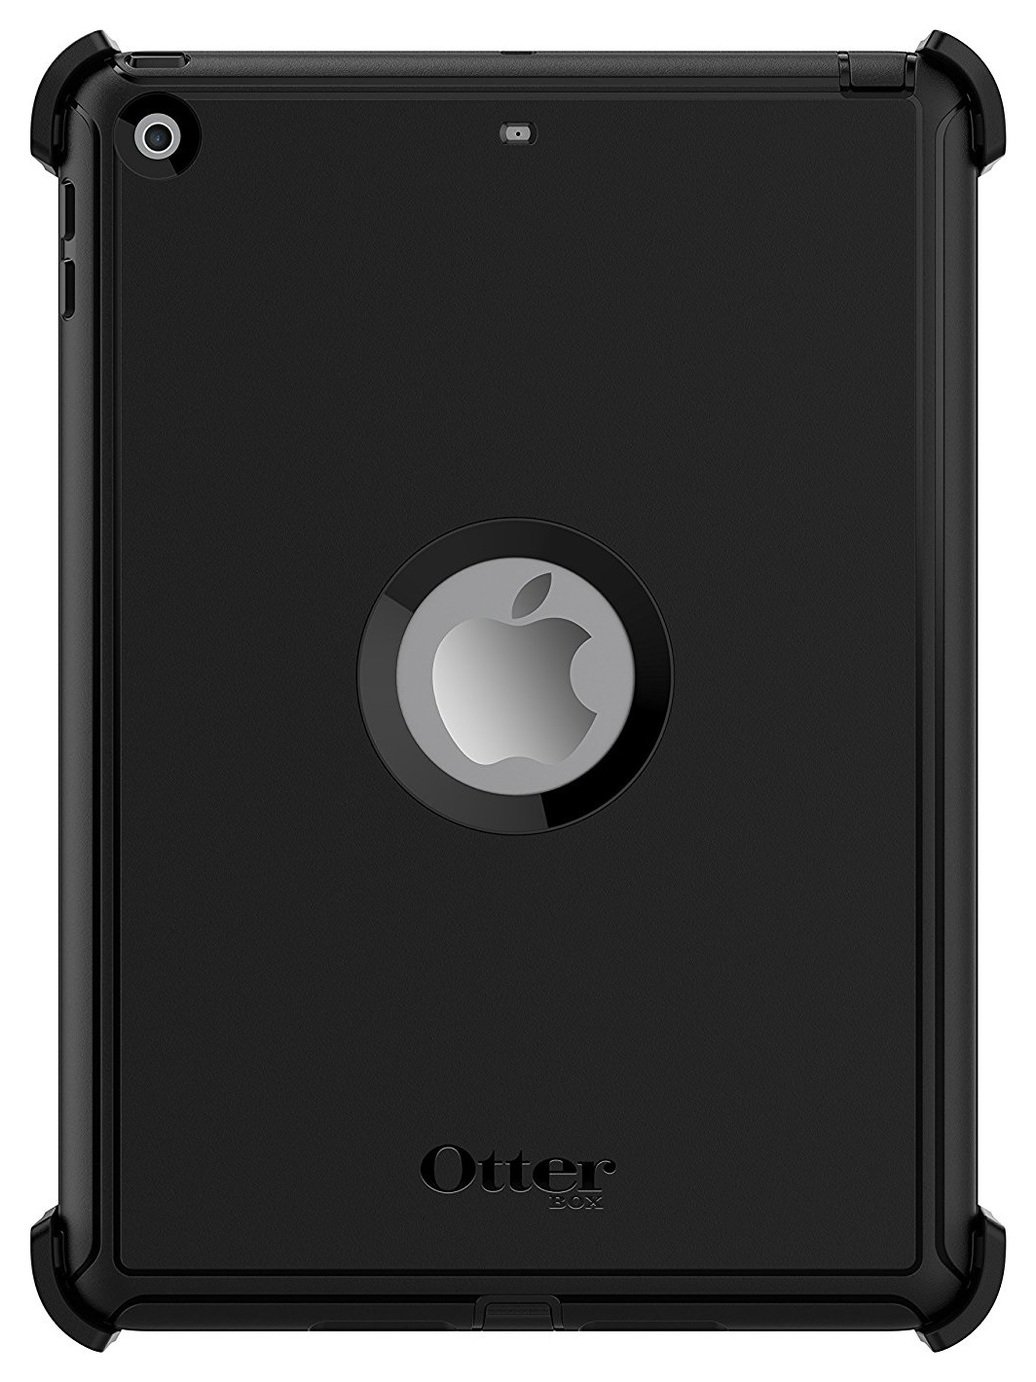 OtterBox Defender iPad 5th Gen Case - Black